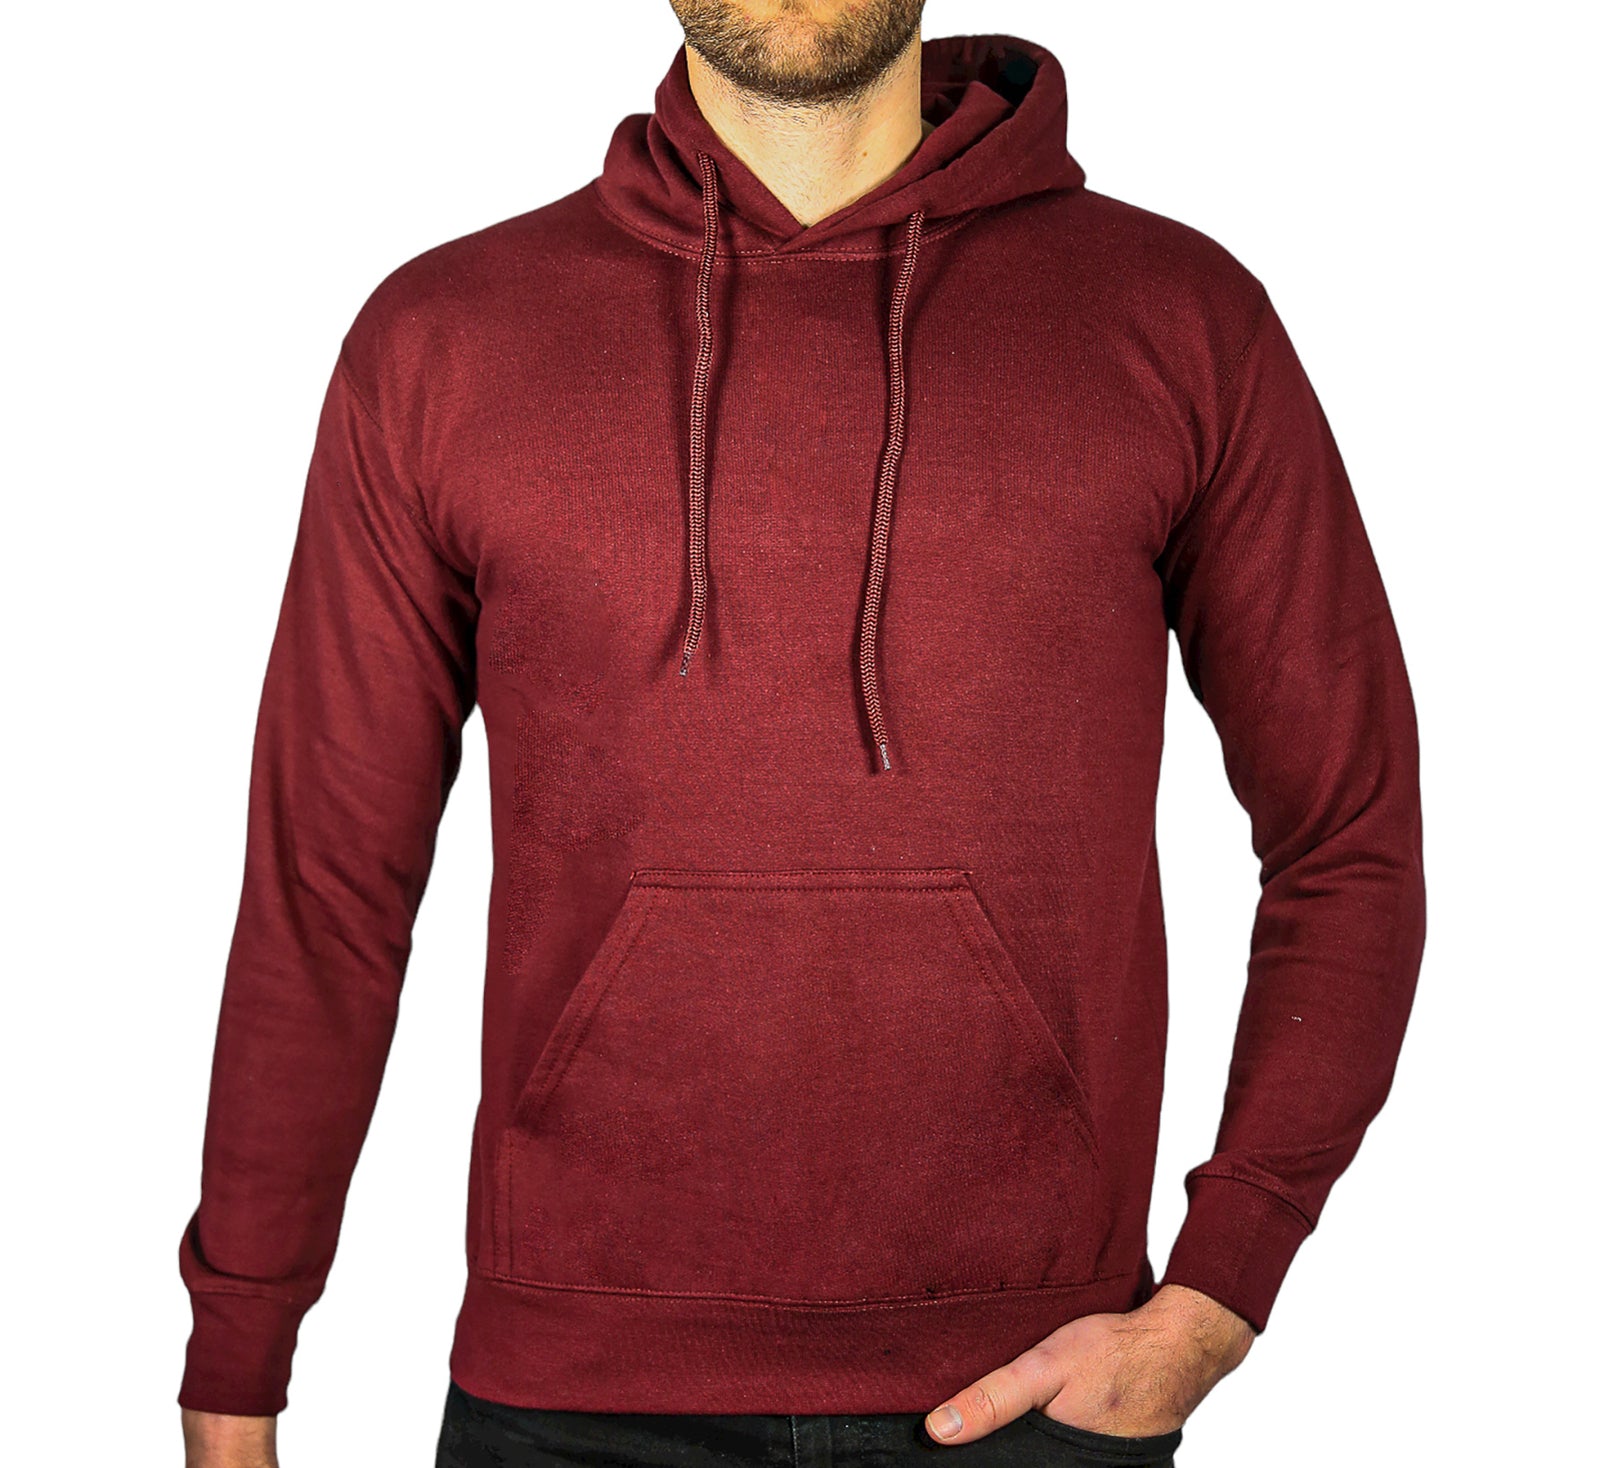 Adult Mens 100% Cotton Fleece Hoodie Jumper Pullover Sweater Warm Sweatshirt - Maroon/Burgundy - M